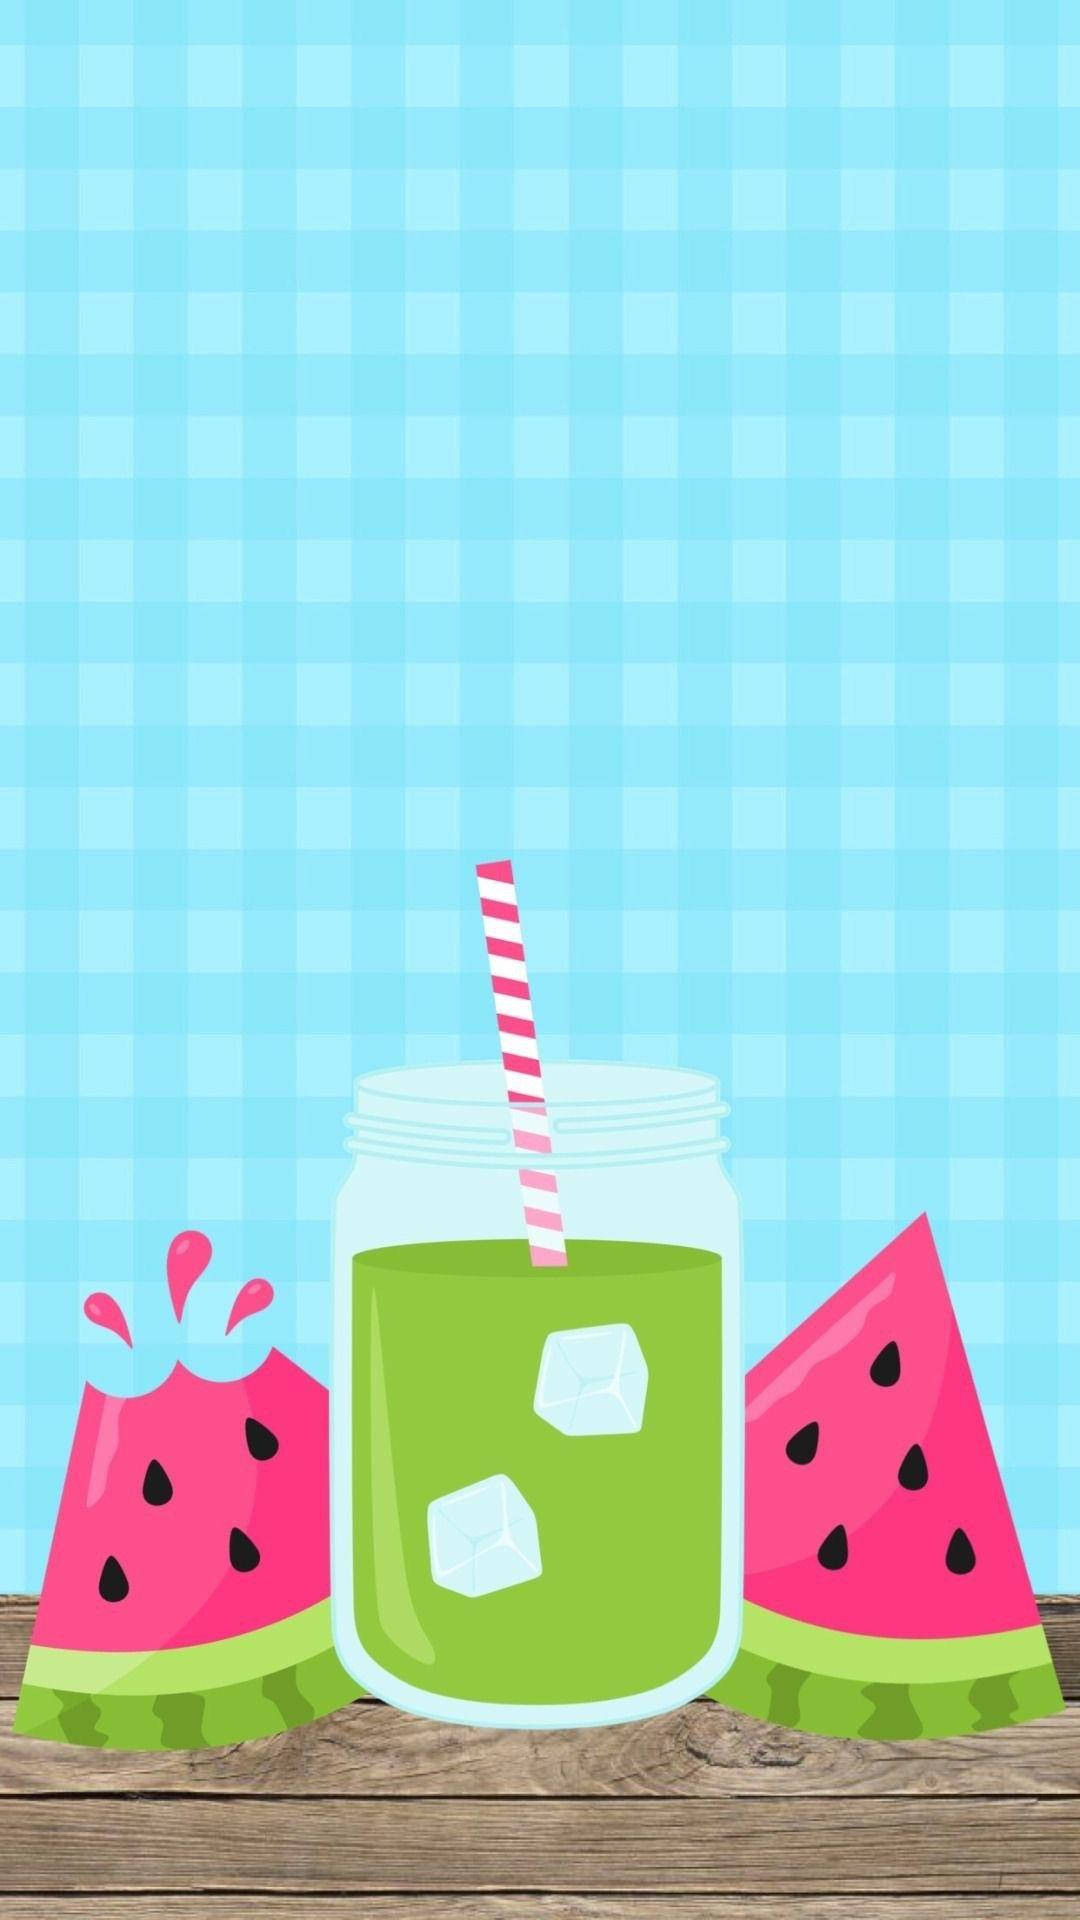 Cute Watermelon Drink Vector Art Background